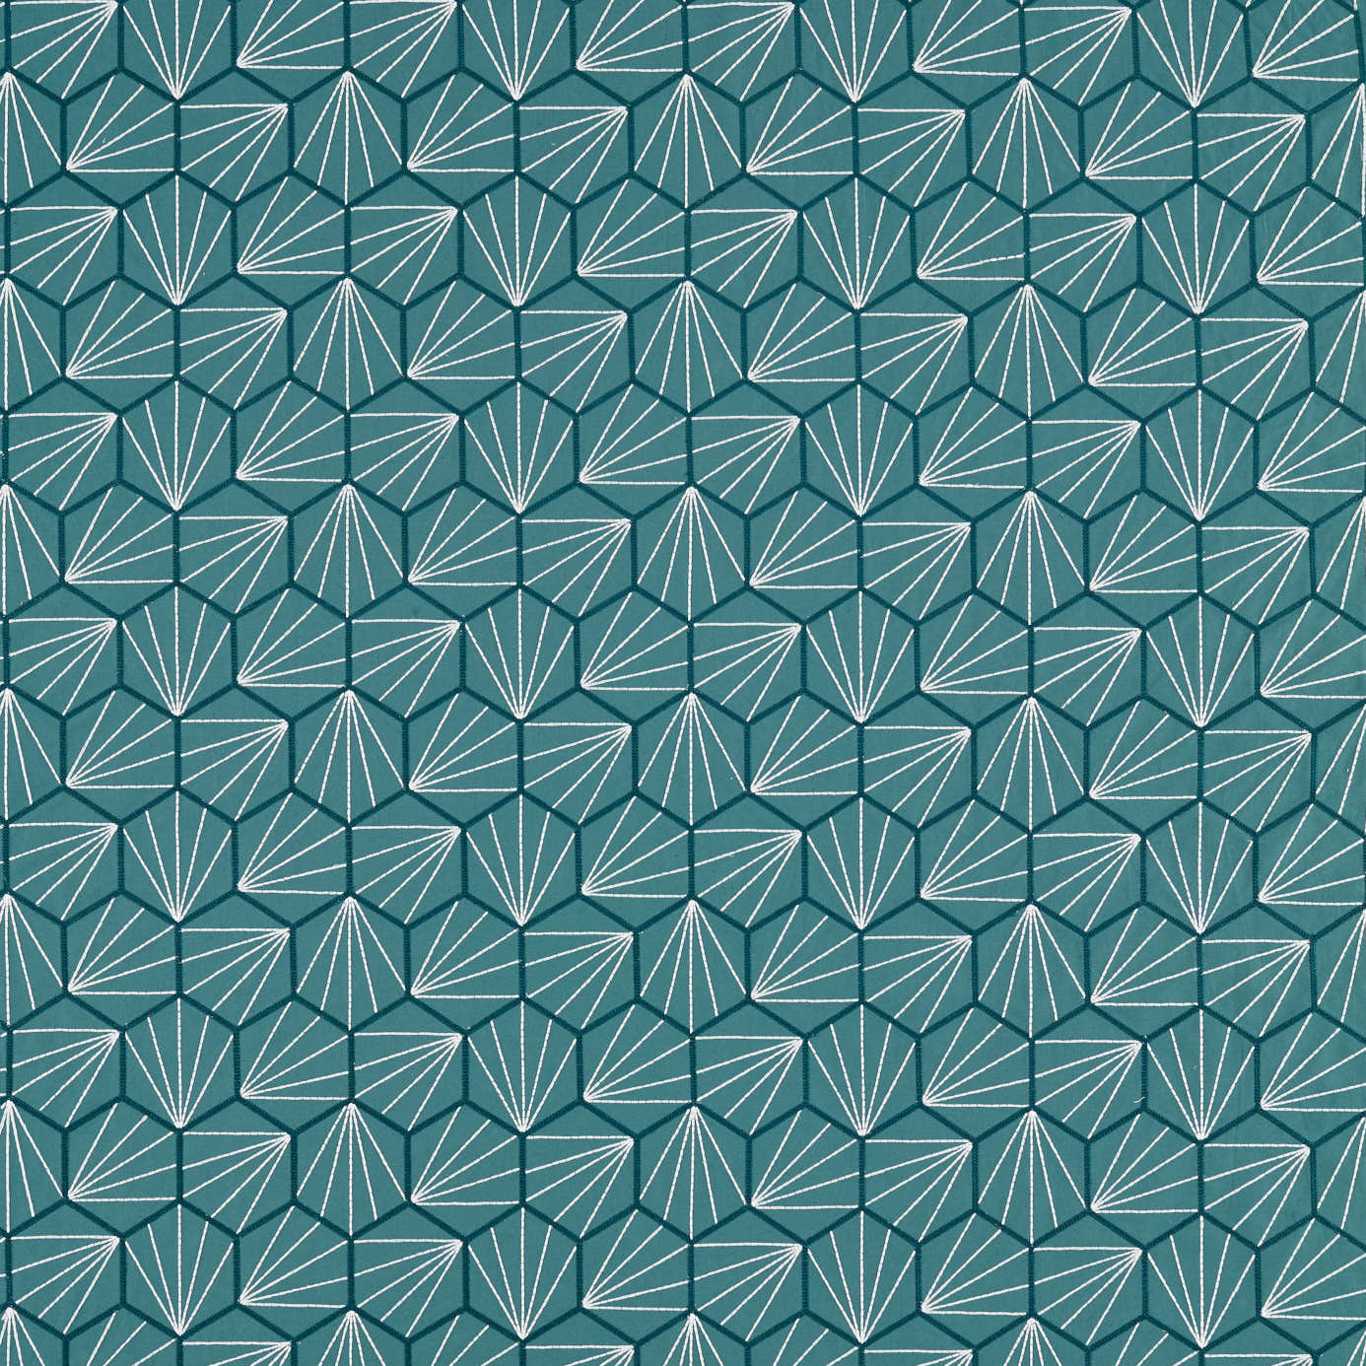 Aikyo Fabric by Scion - NJAP132736 - Teal